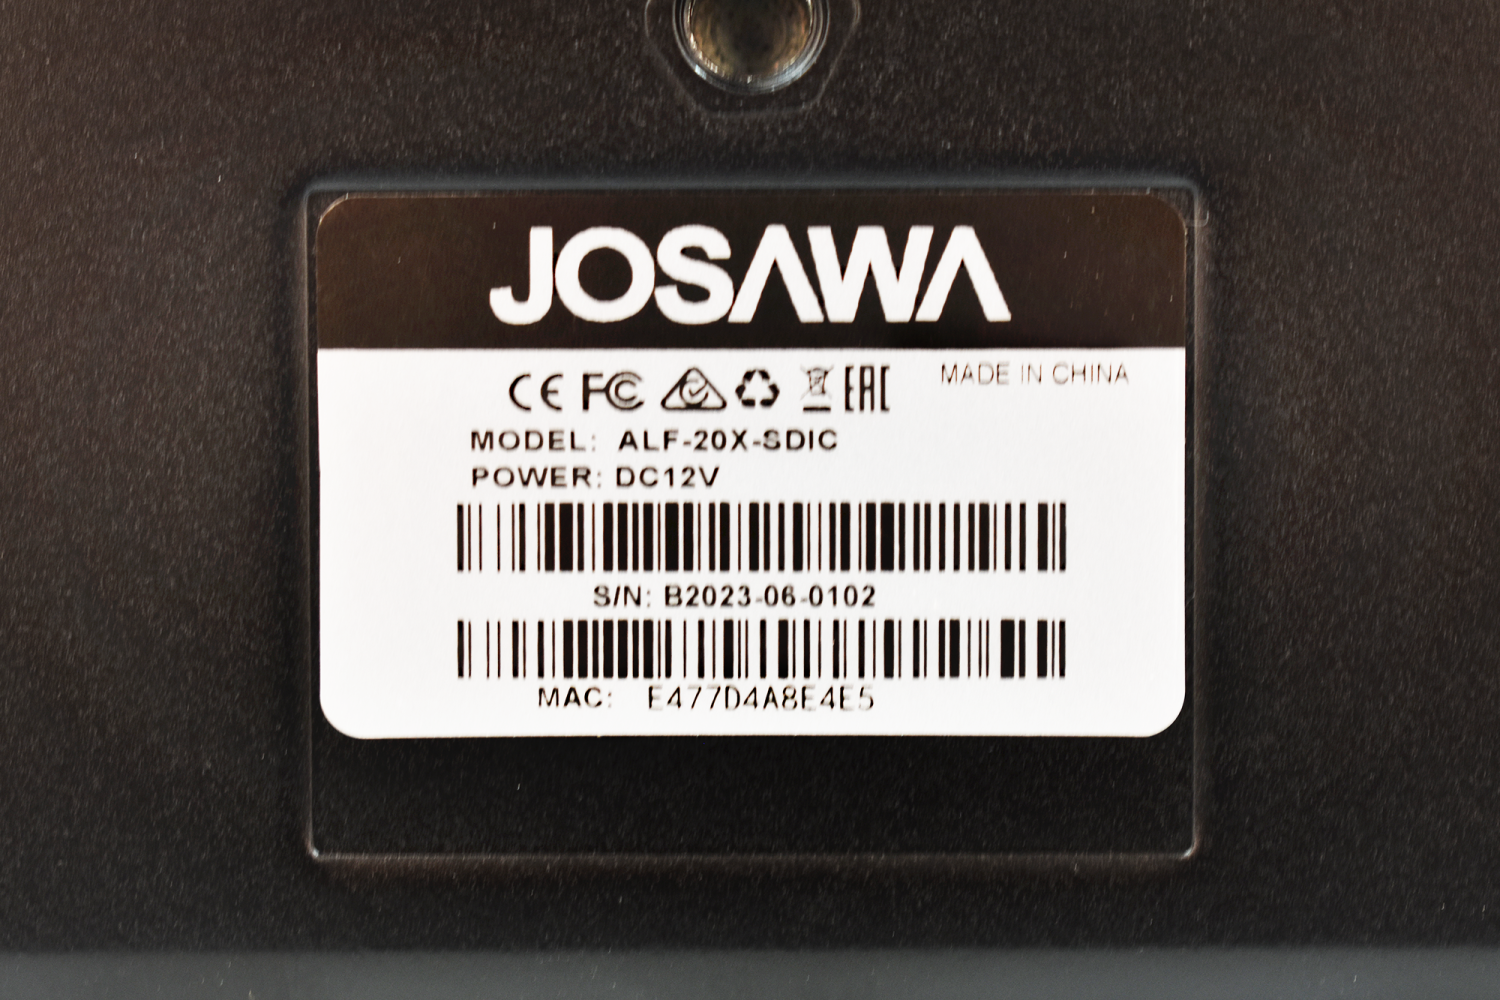 Josawa 20X-SDIC